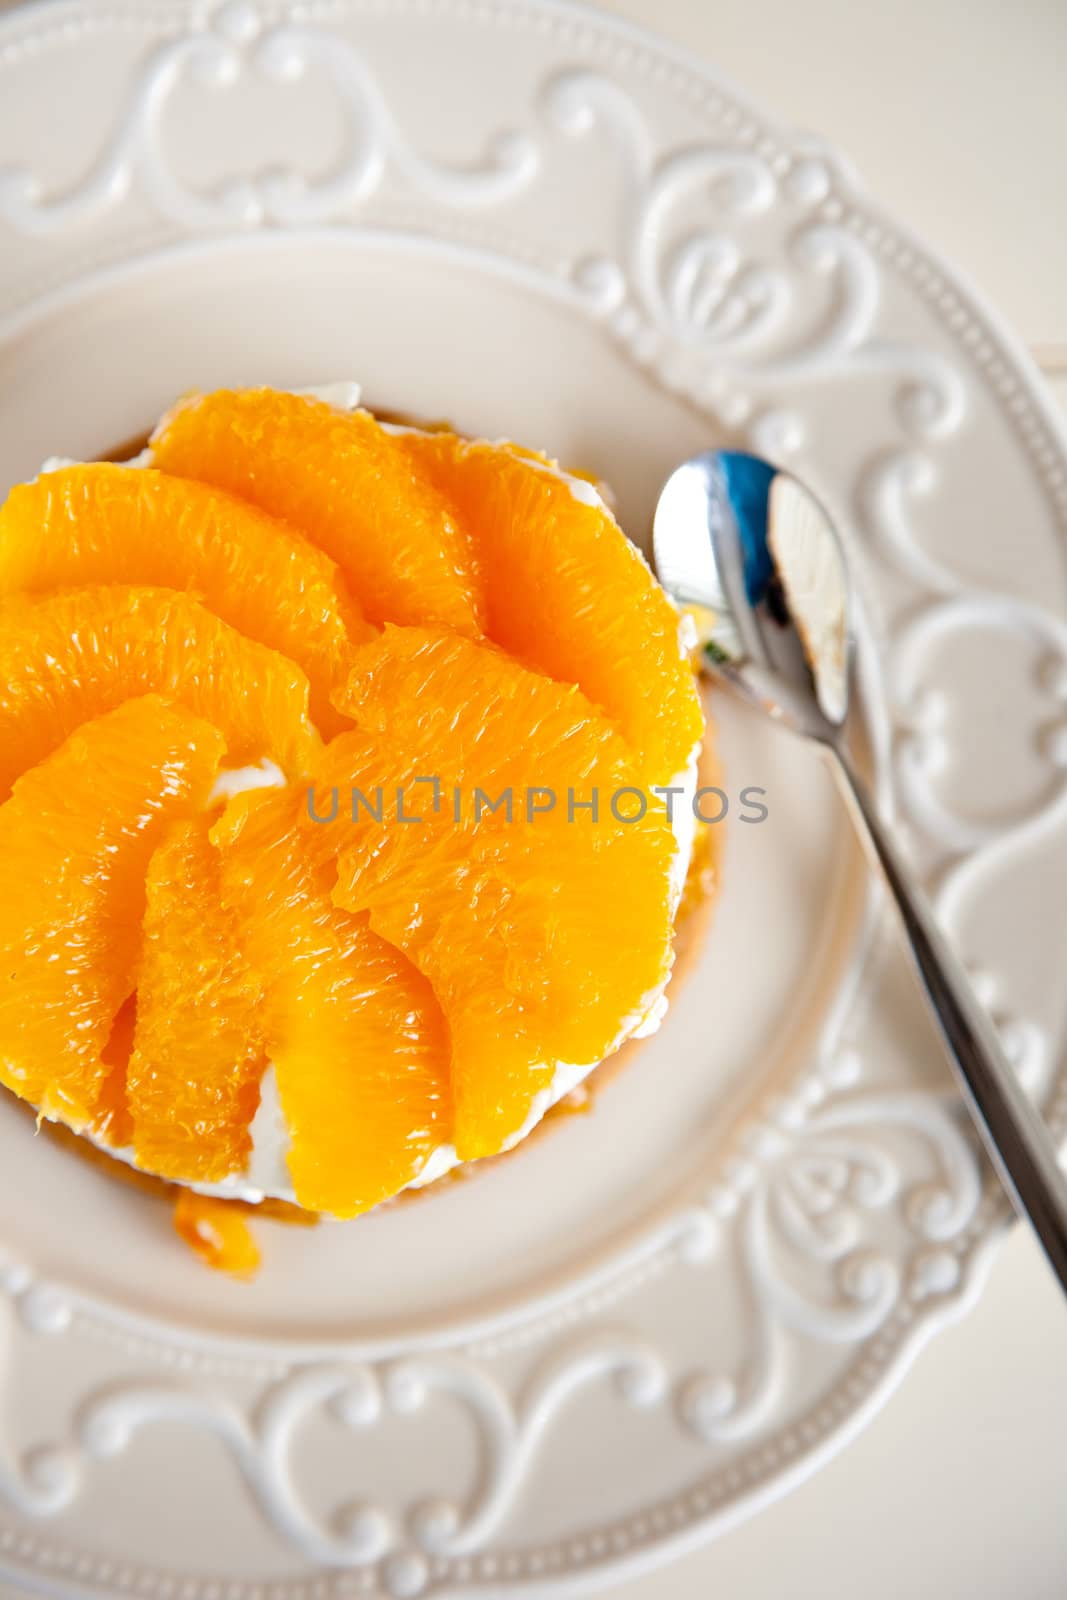 Delicious orange tian with fresh oranges